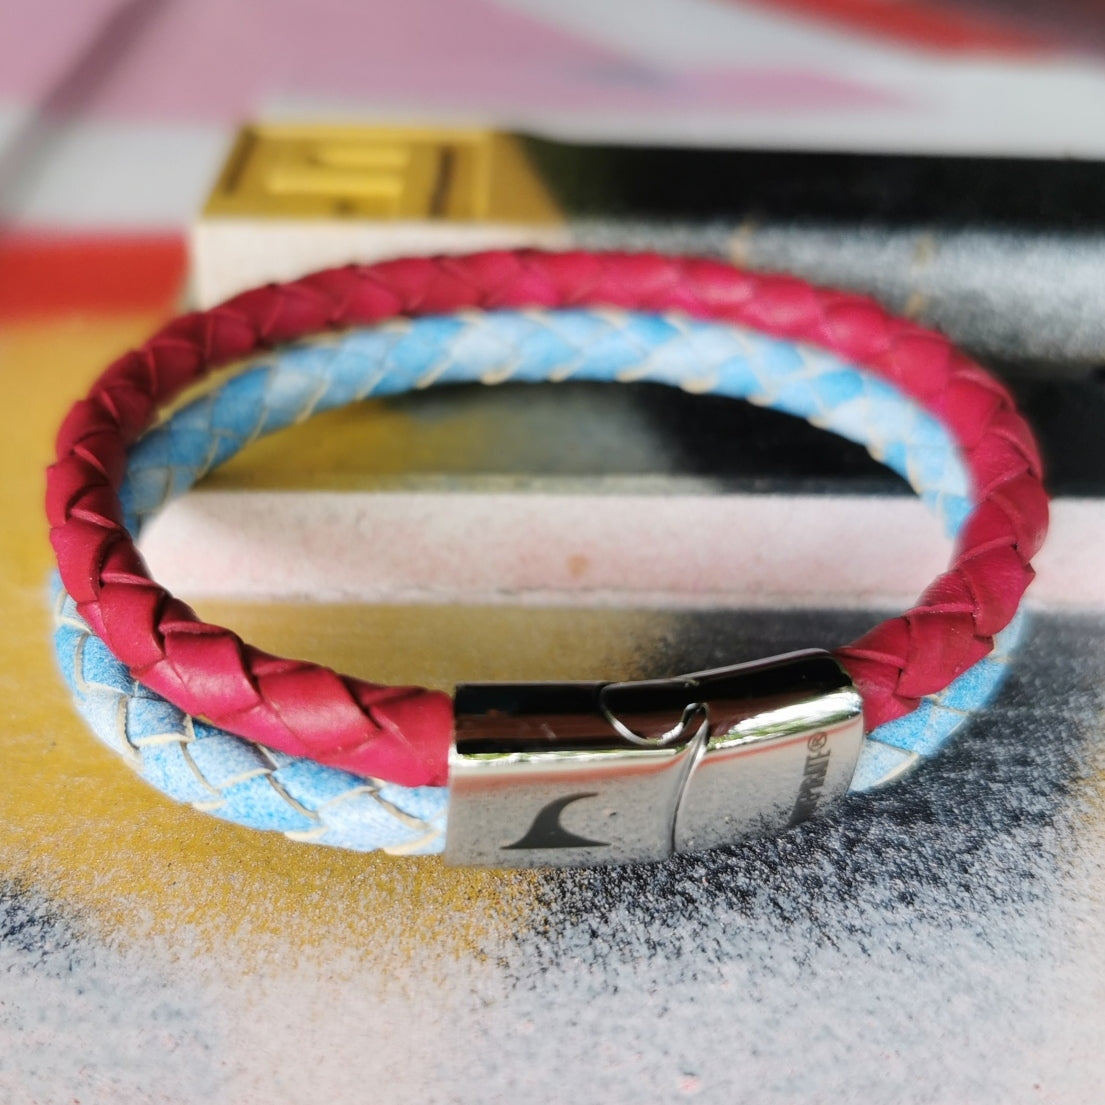 Herren-leder-armband-damen-swell-himmbeere-ice-pink-blau-geflochten-Edelstahlverschluss-detail-wavepirate-shop-mx